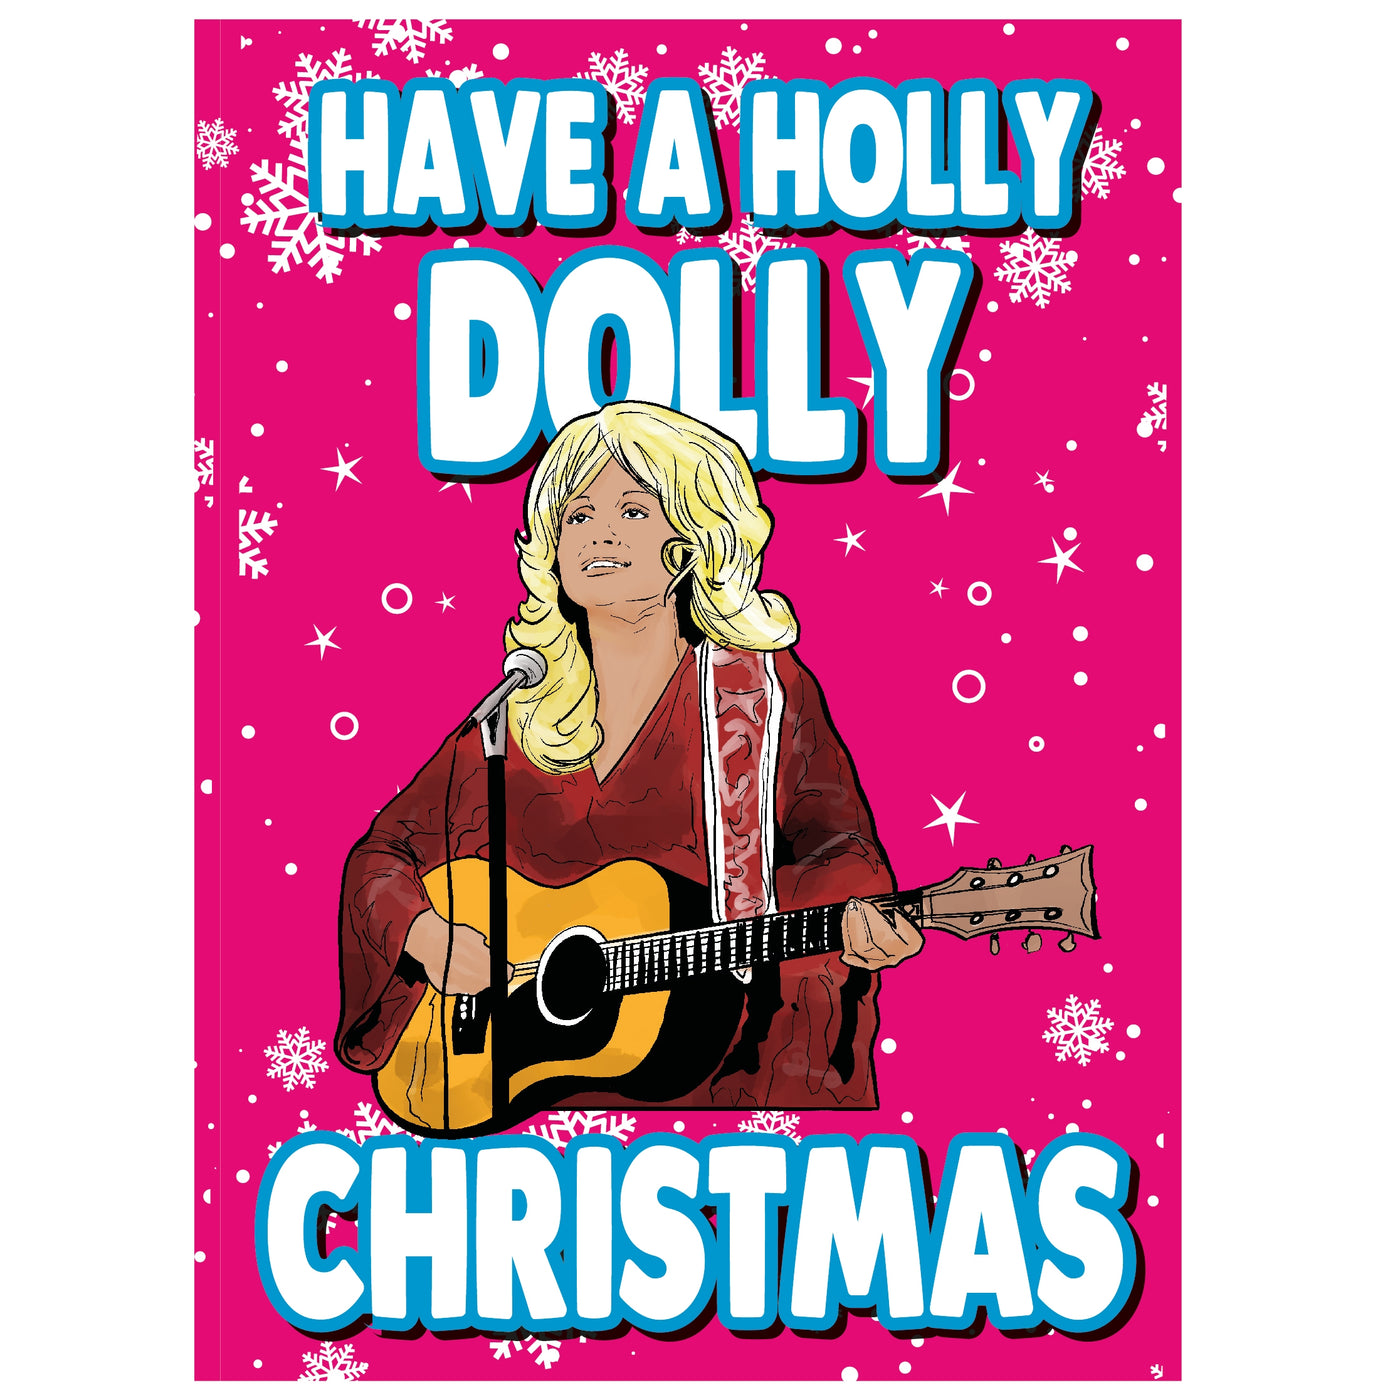 Holly Dolly Parton Christmas Card